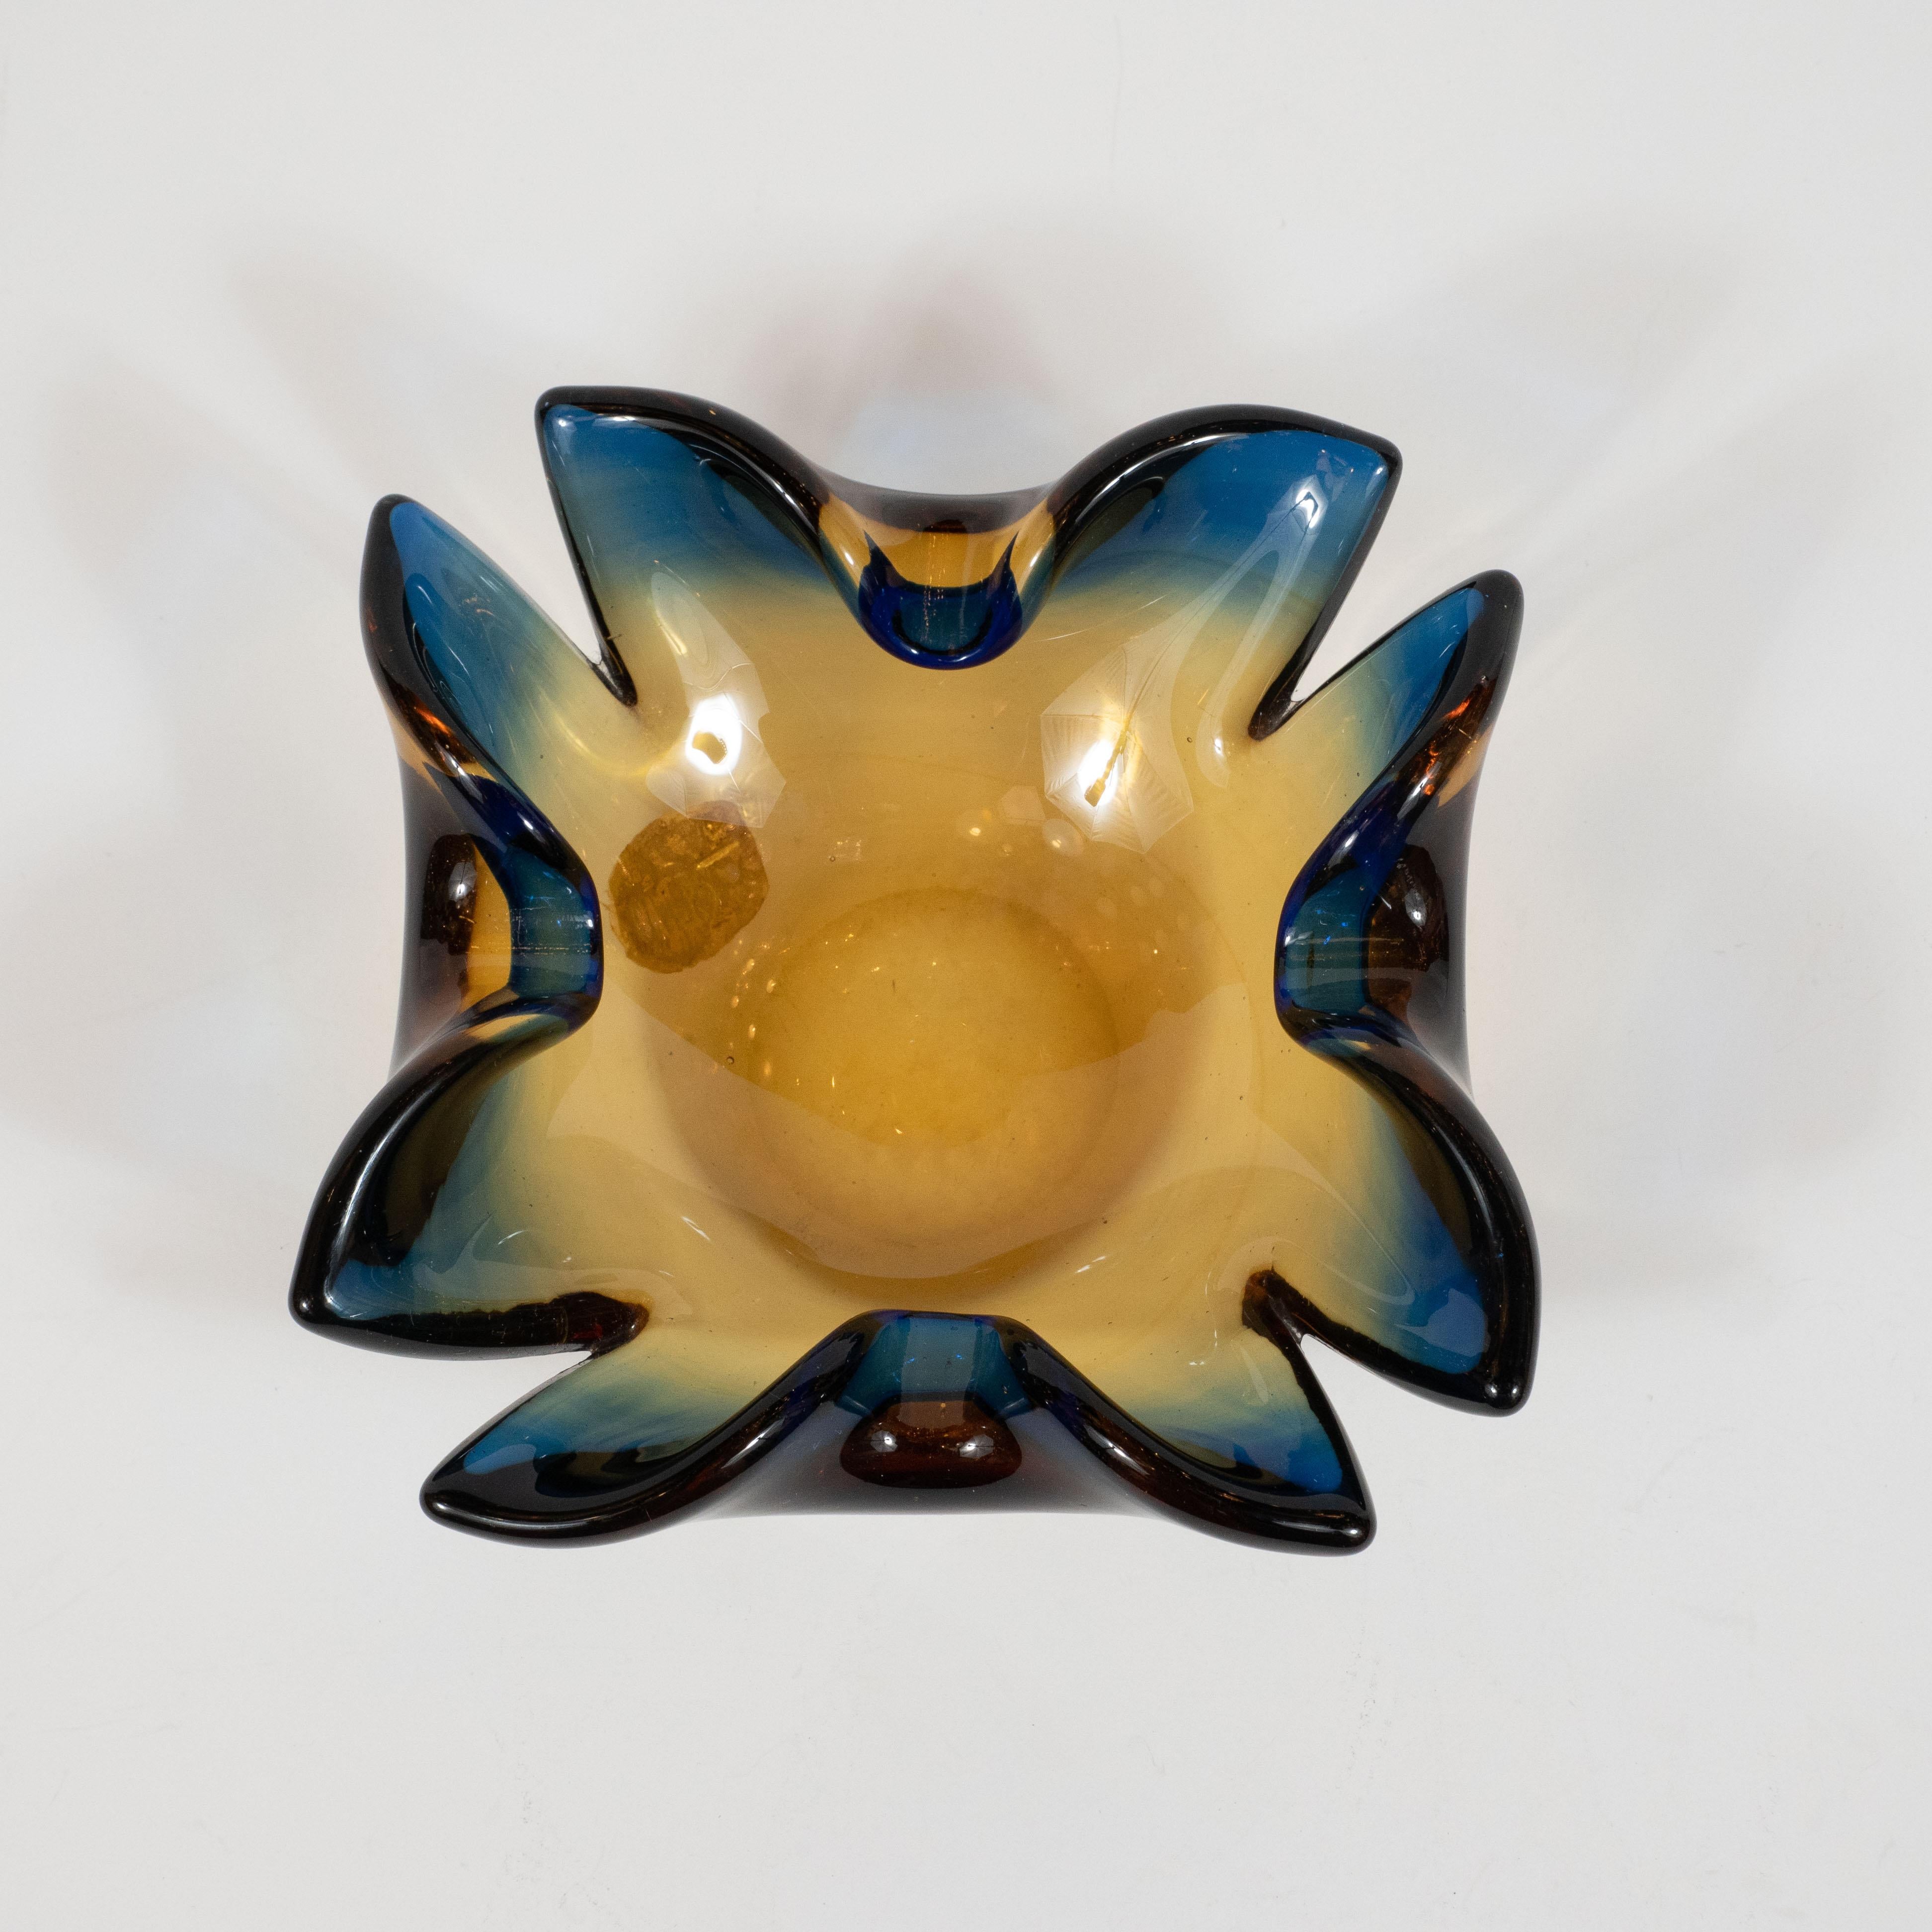 Italian Midcentury Sculptural Hand Blown Murano Bowl in Sapphire and Smoked Citrine